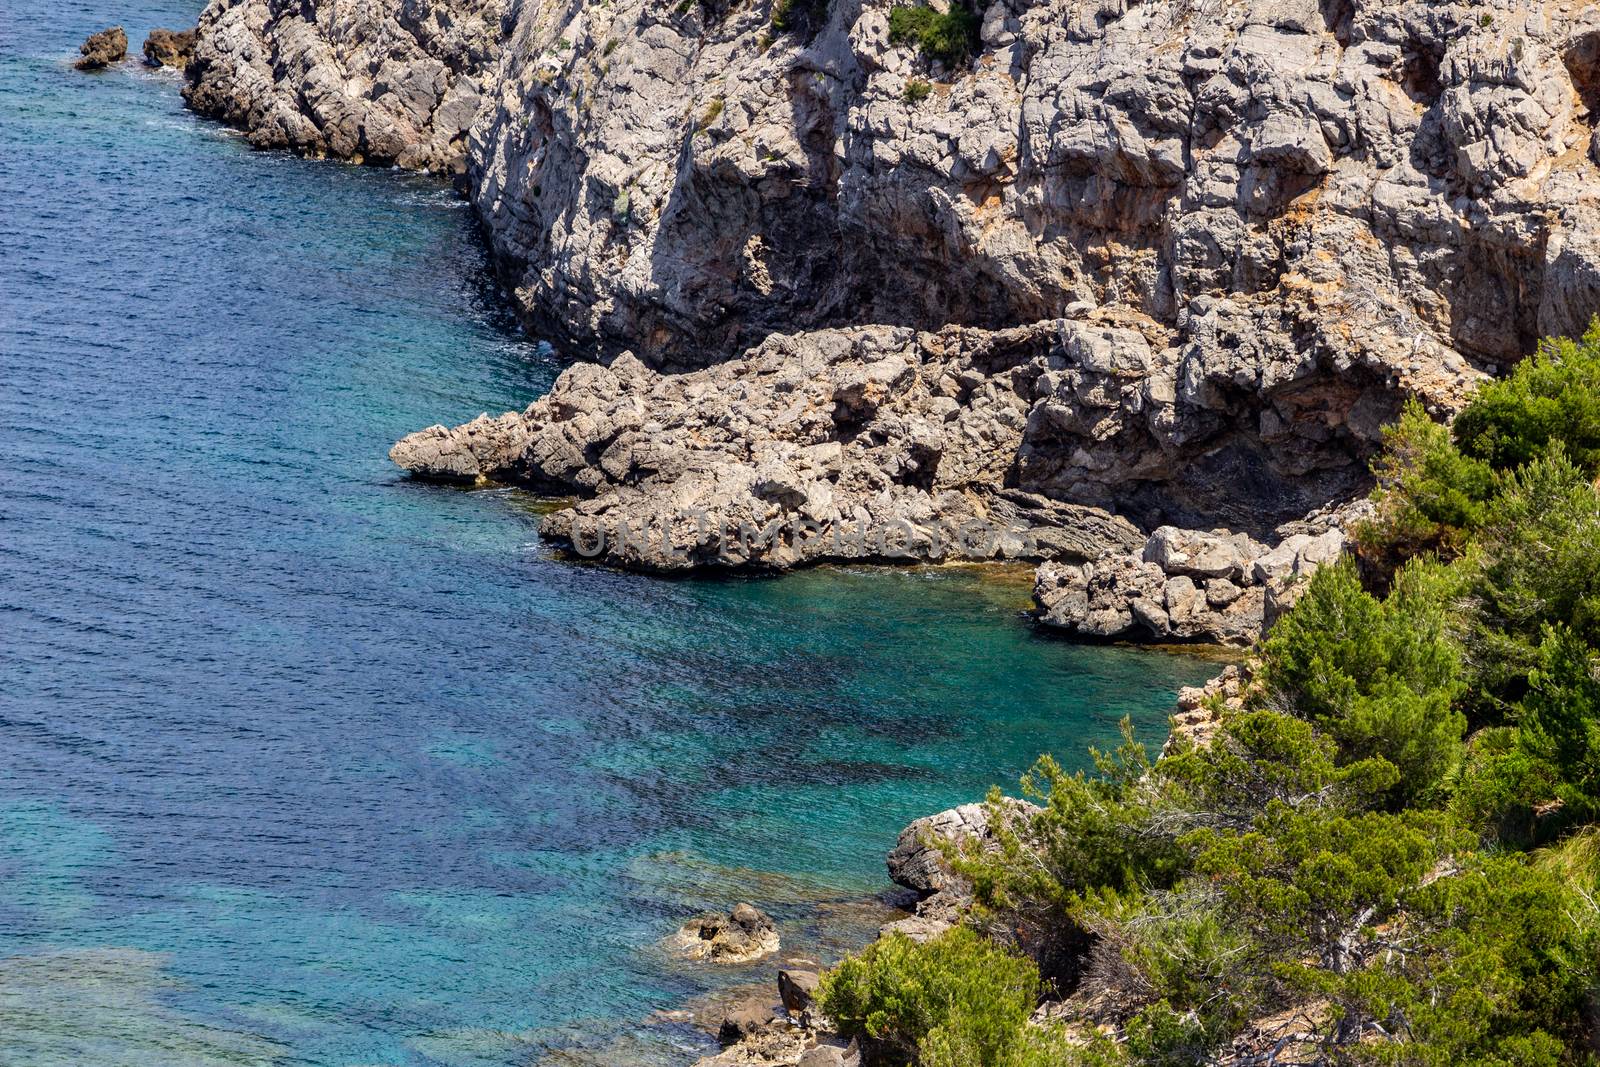 Peninsula La Victoria at Baleares island Mallorca by reinerc